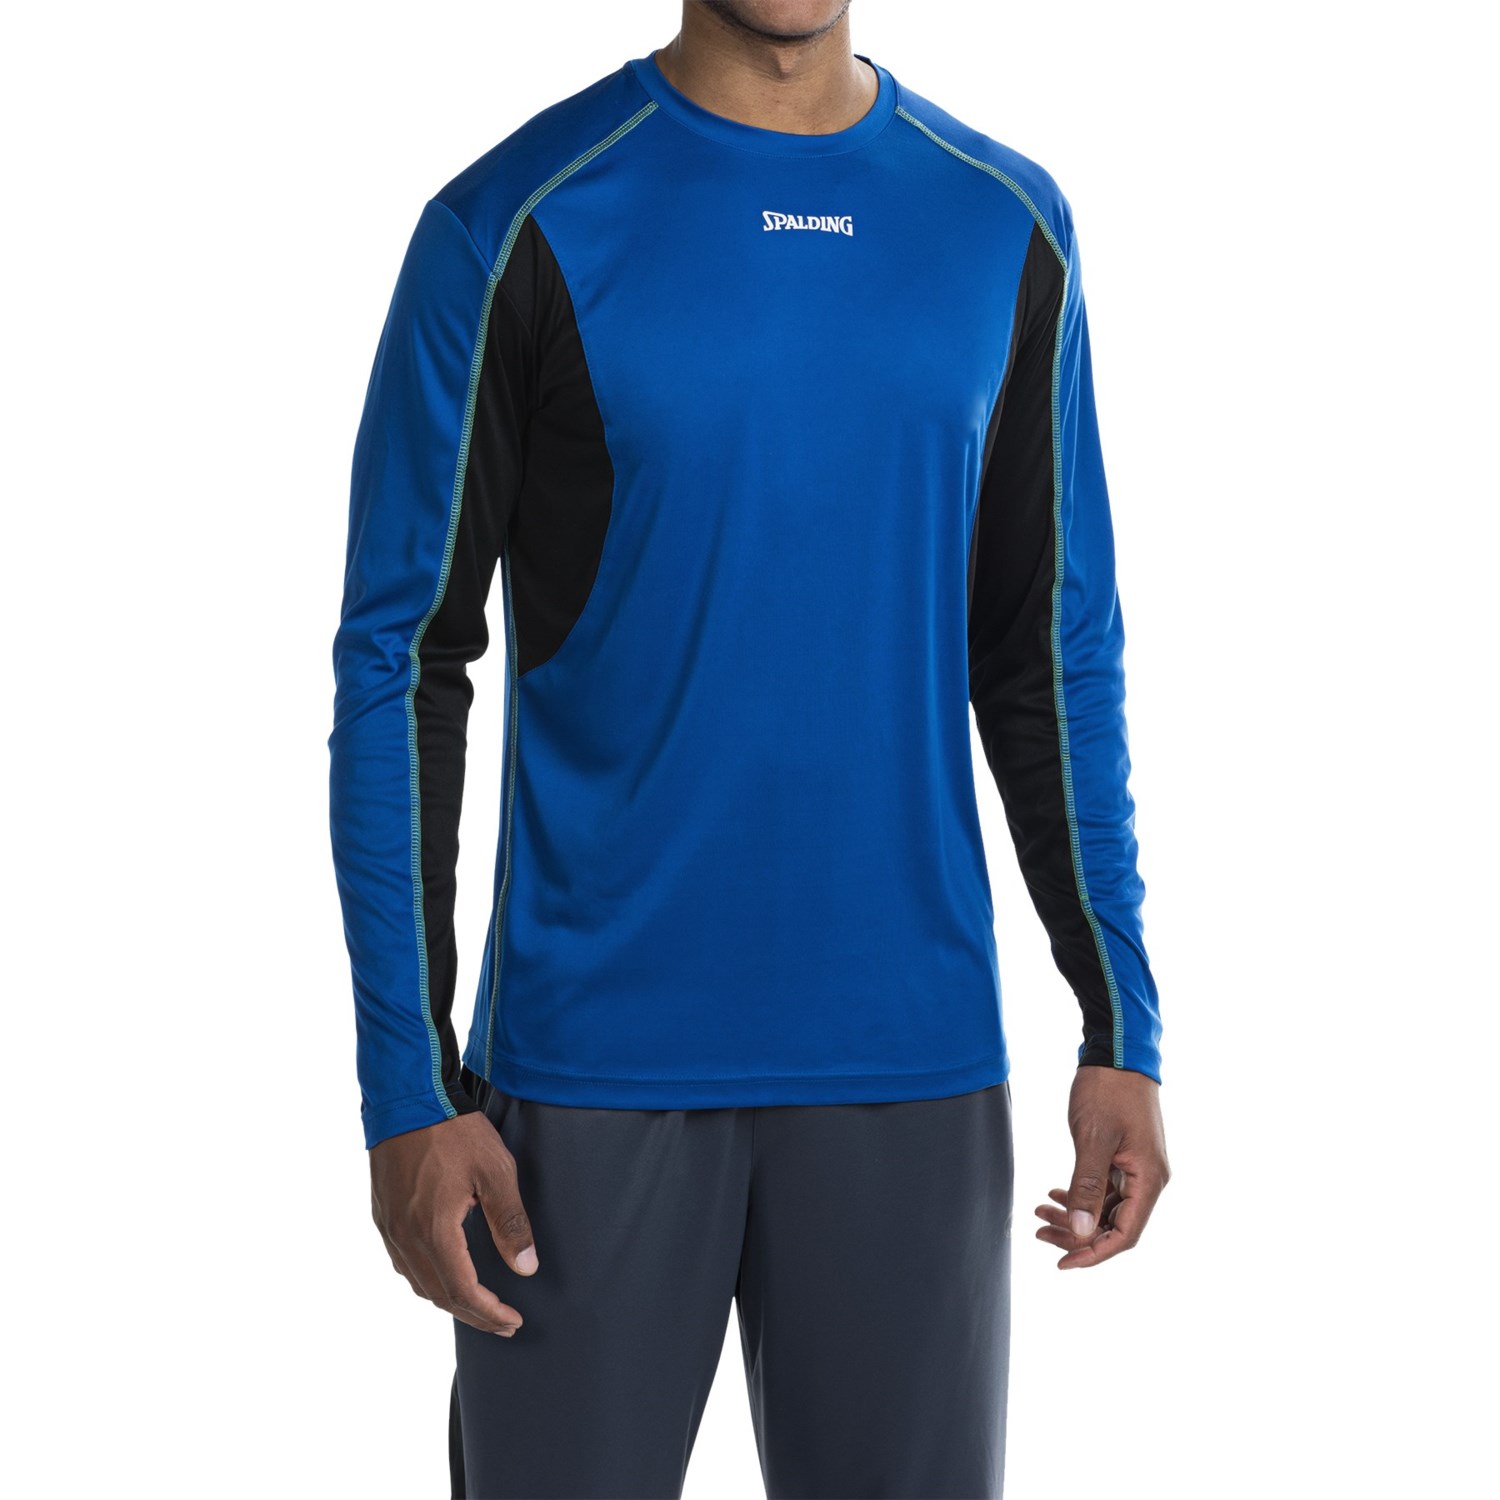 Spalding Turbo High-Performance T-Shirt (For Men) 167UN - Save 66%